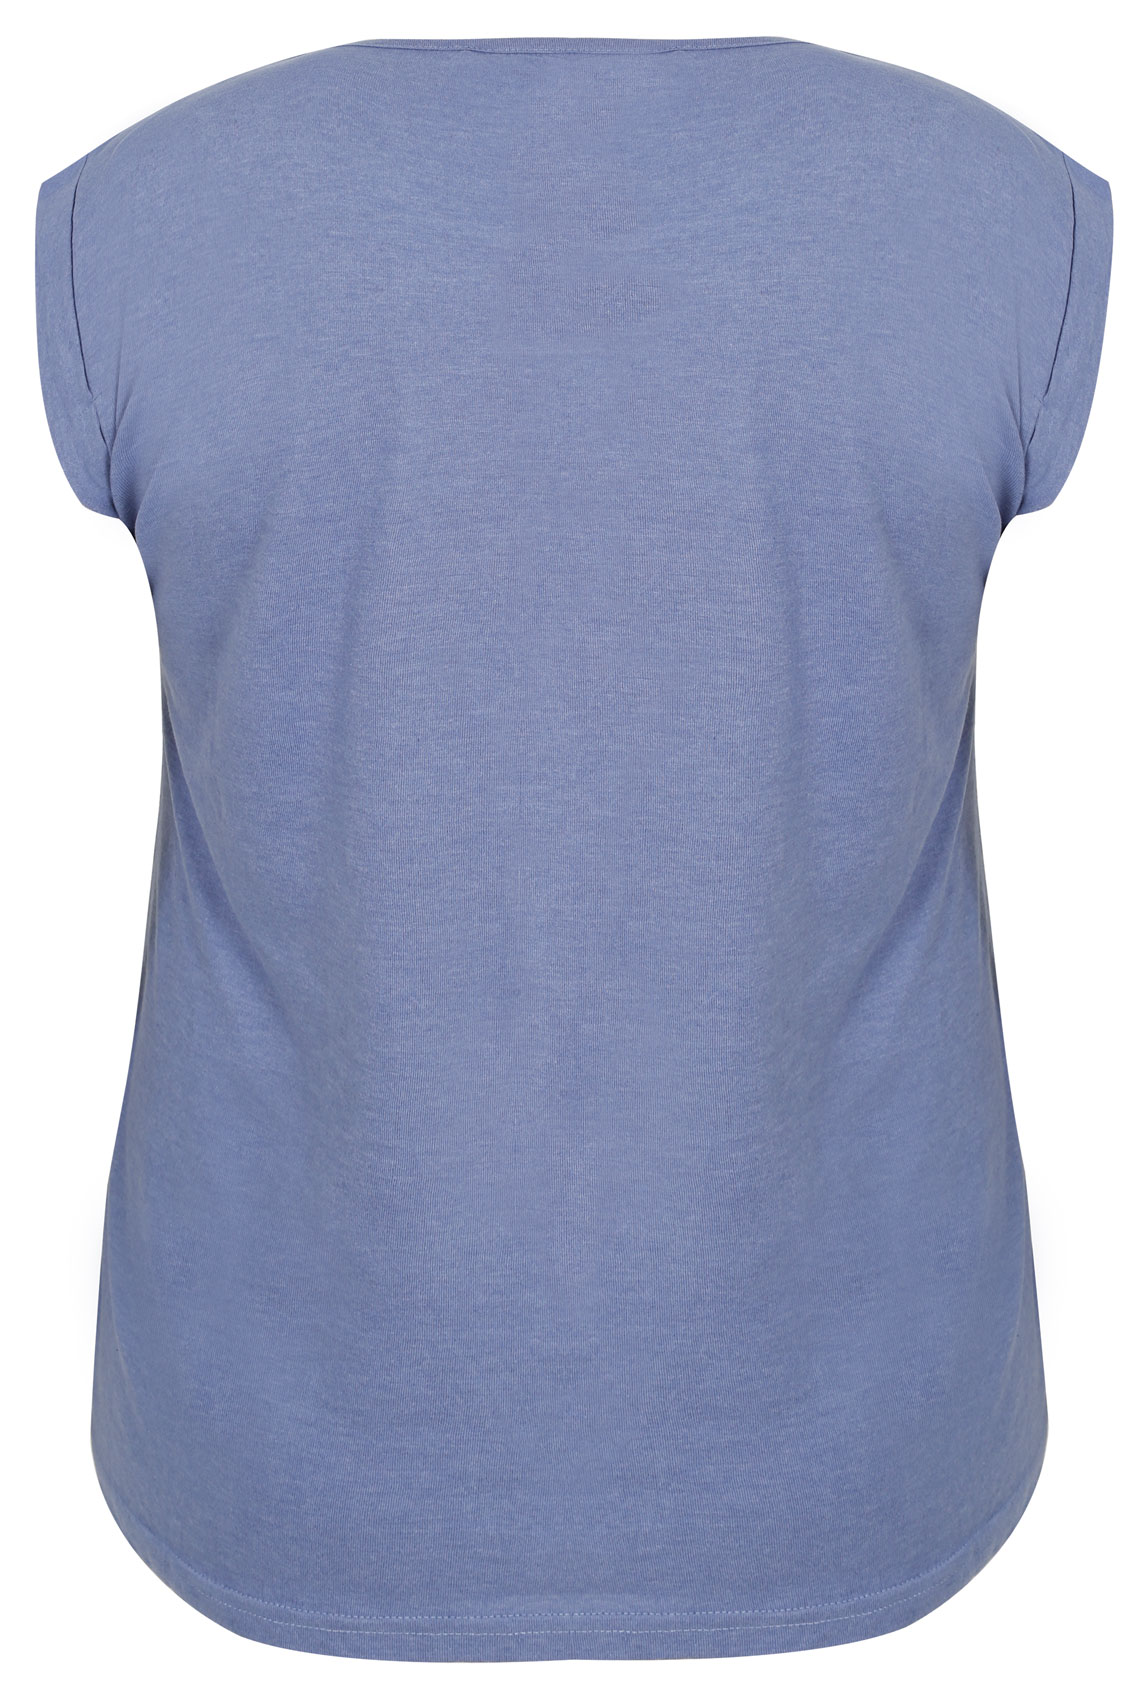 Denim Marl Basic T-Shirt With Turn-Back Short Sleeves Plus Size 16 to 32